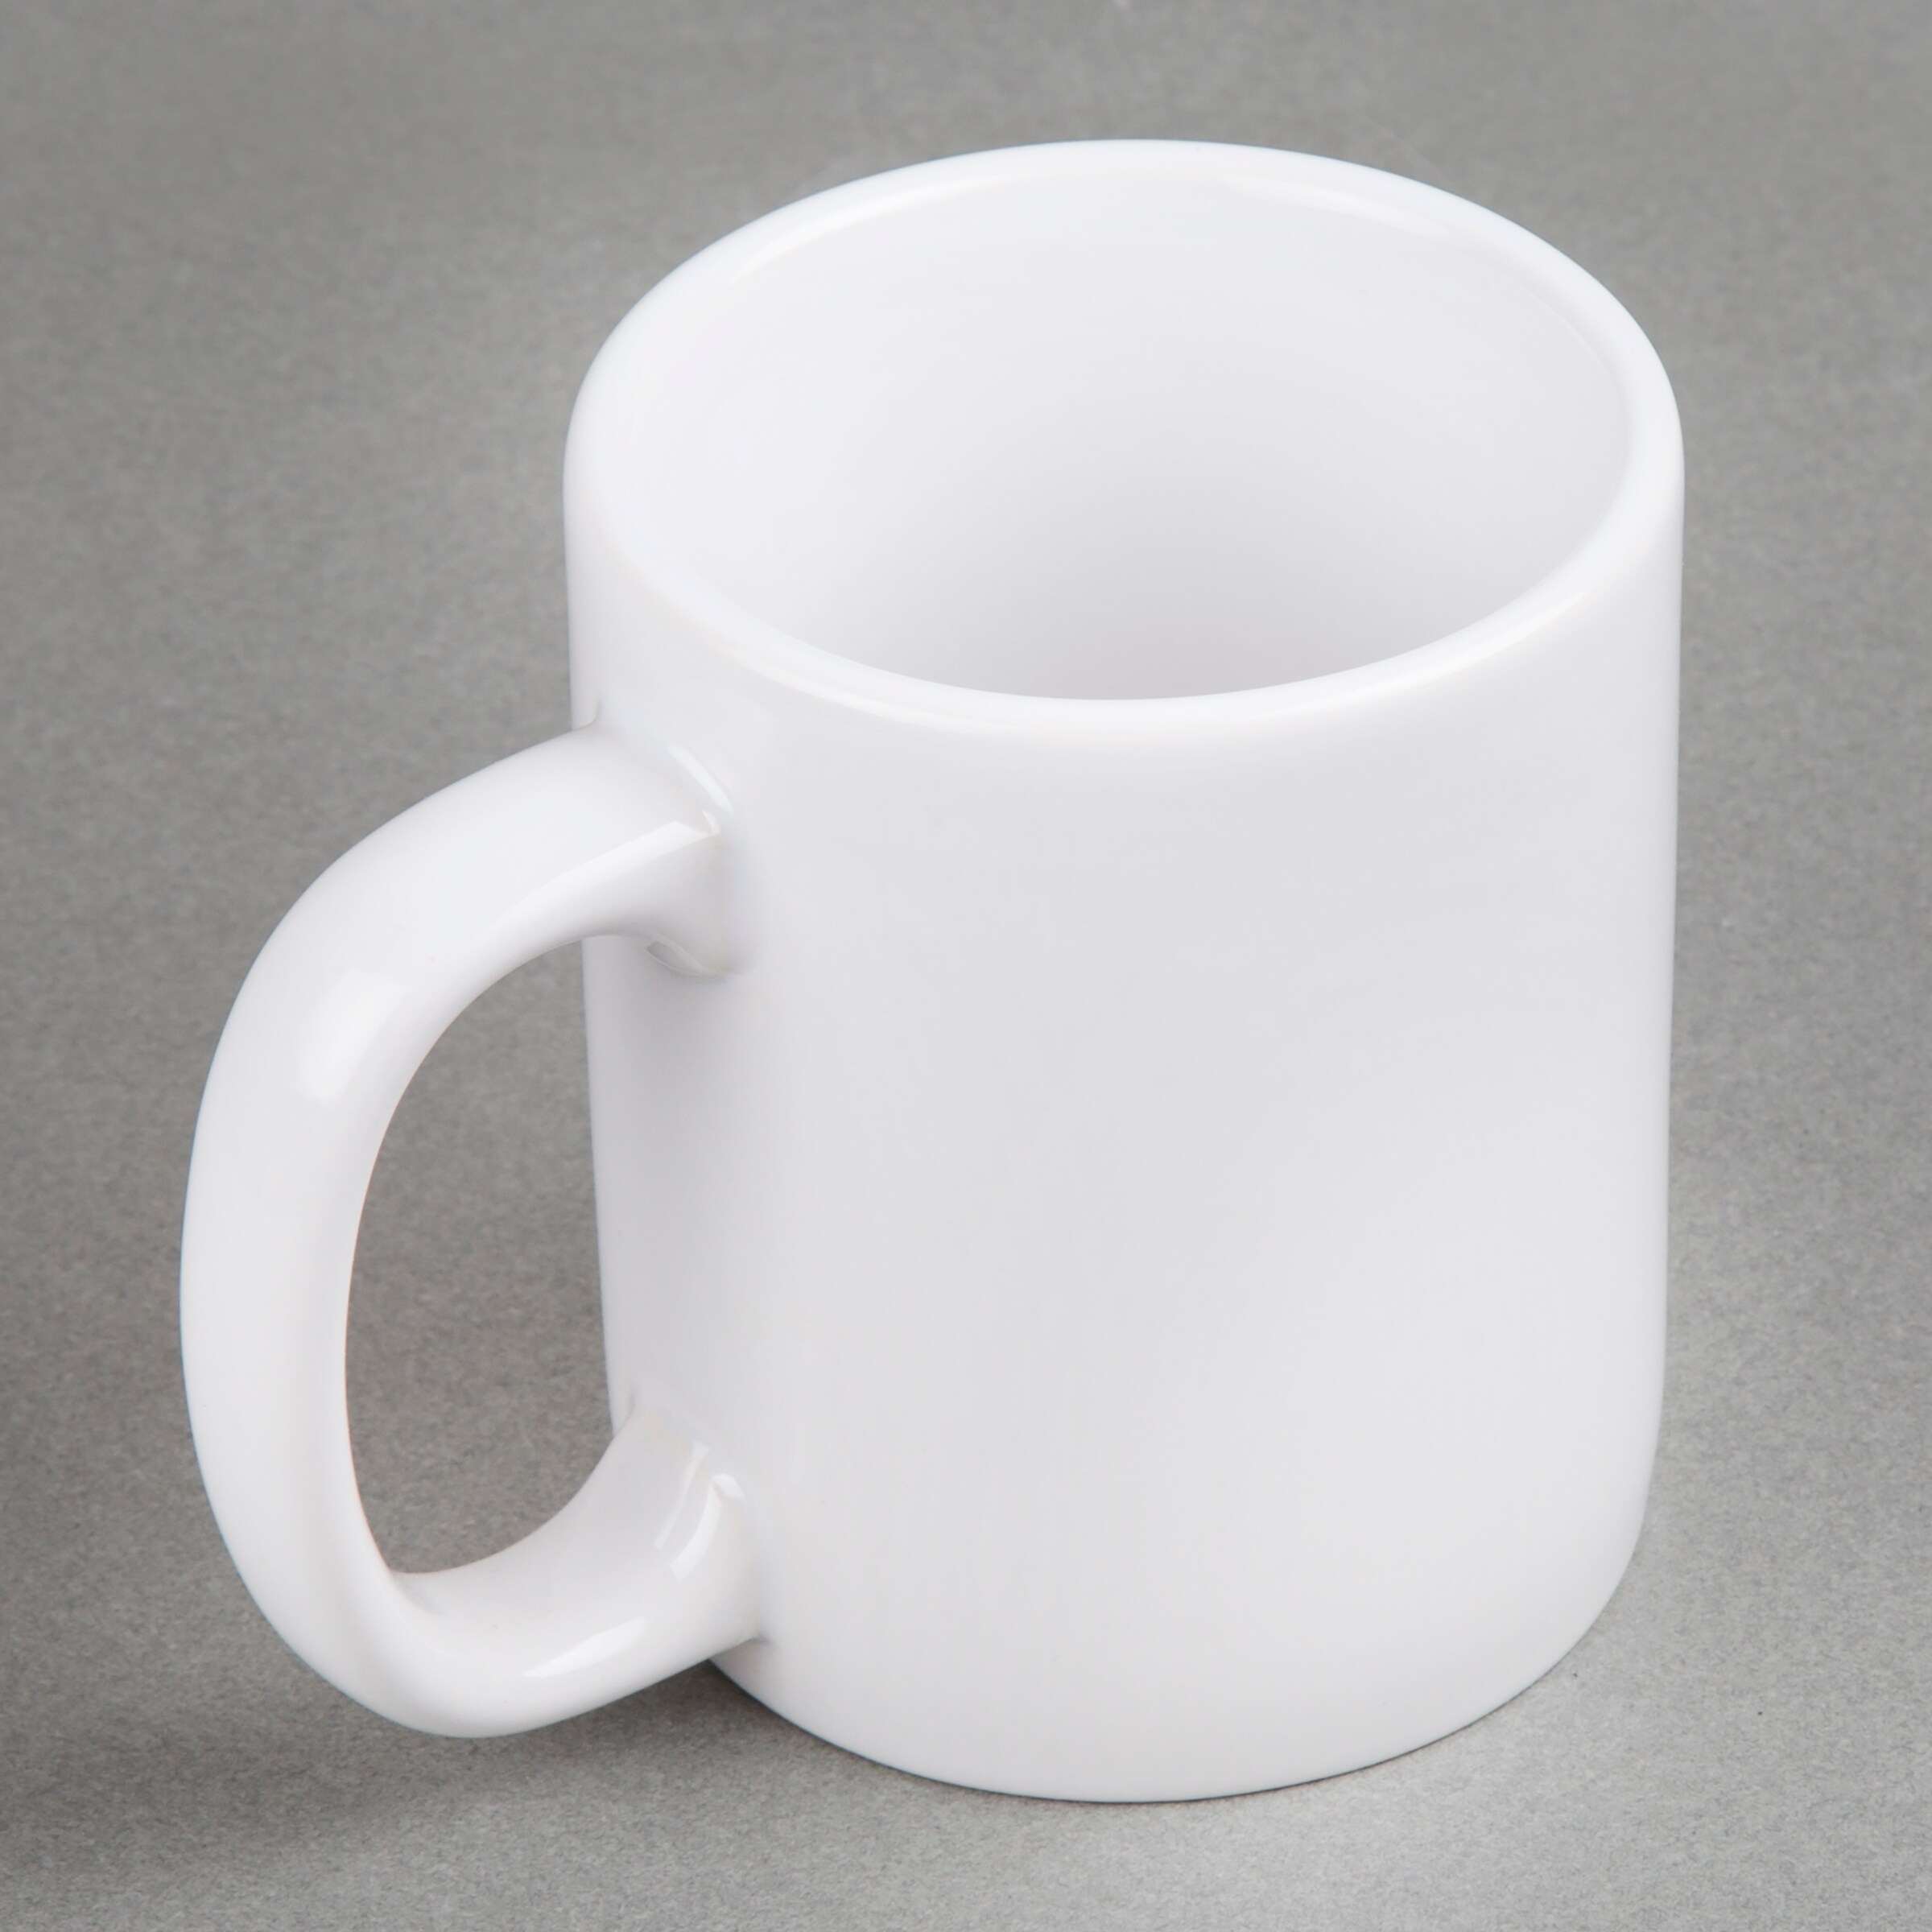 11 oz. White Ceramic Coffee Mug – Made in the USA | Coastal Business